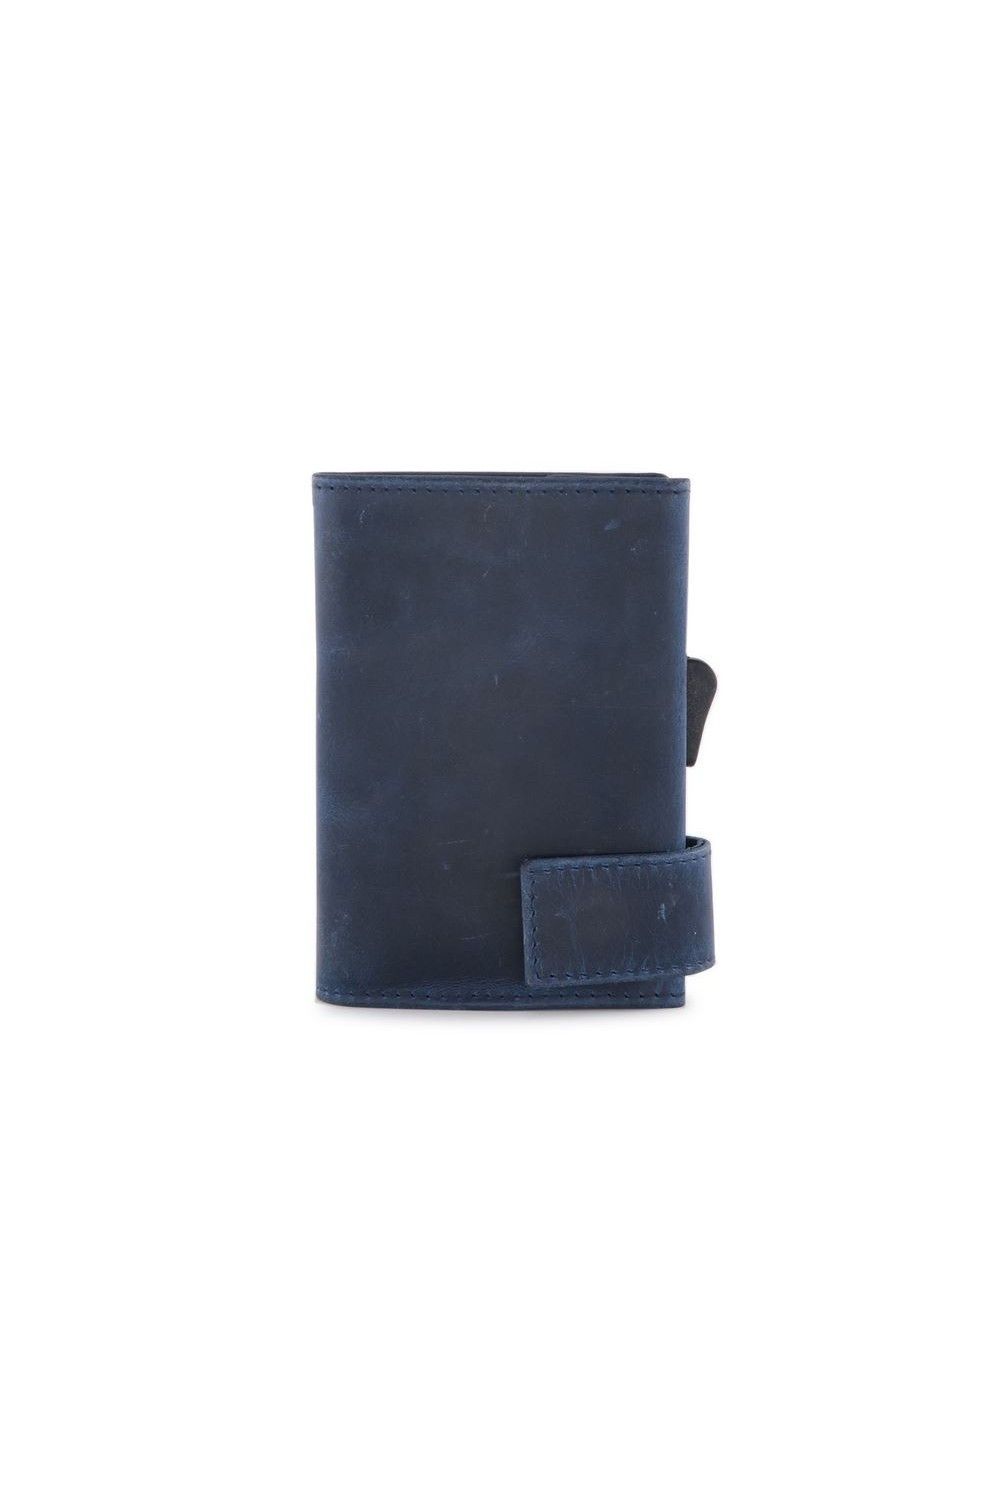 SecWal Card Case DK Leather Hunter Blue